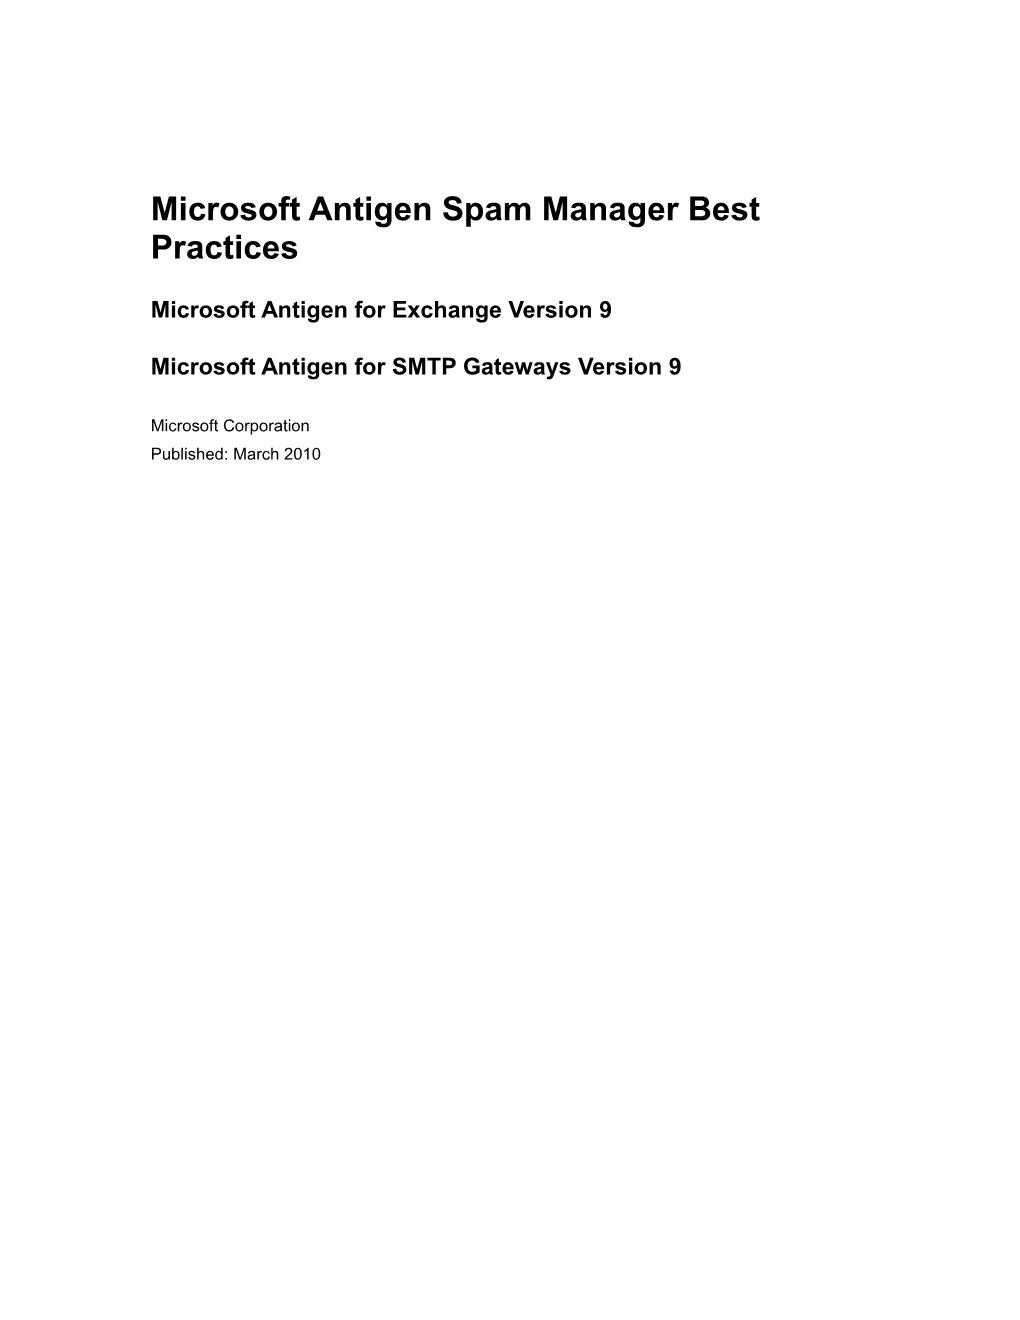 Microsoft Antigen Spam Manager Best Practices